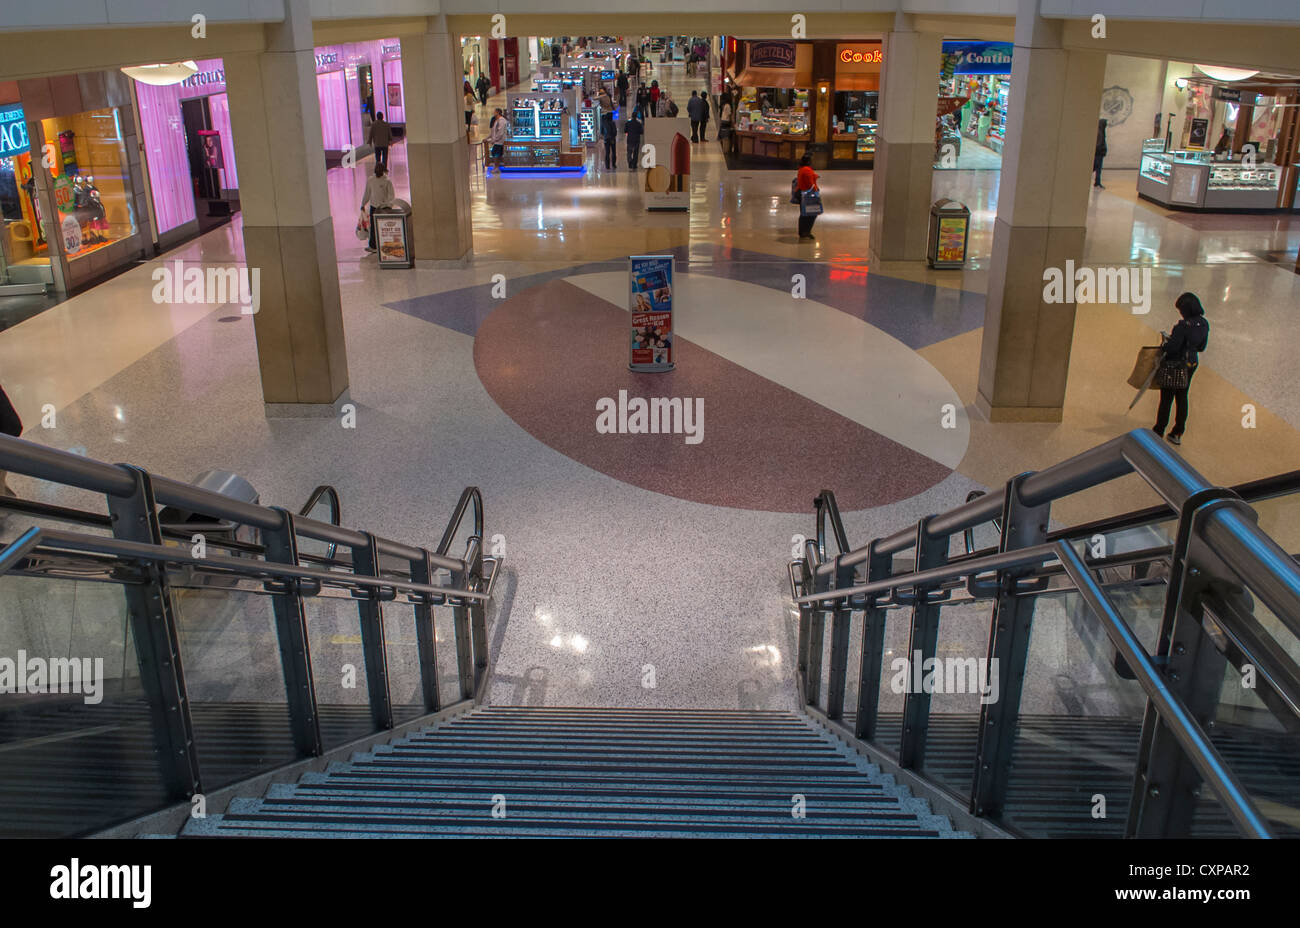 New York City, NY, USA, View inside 'King's Plaza' Shopping Mall, Hallway, modern commercial interior Stock Photo